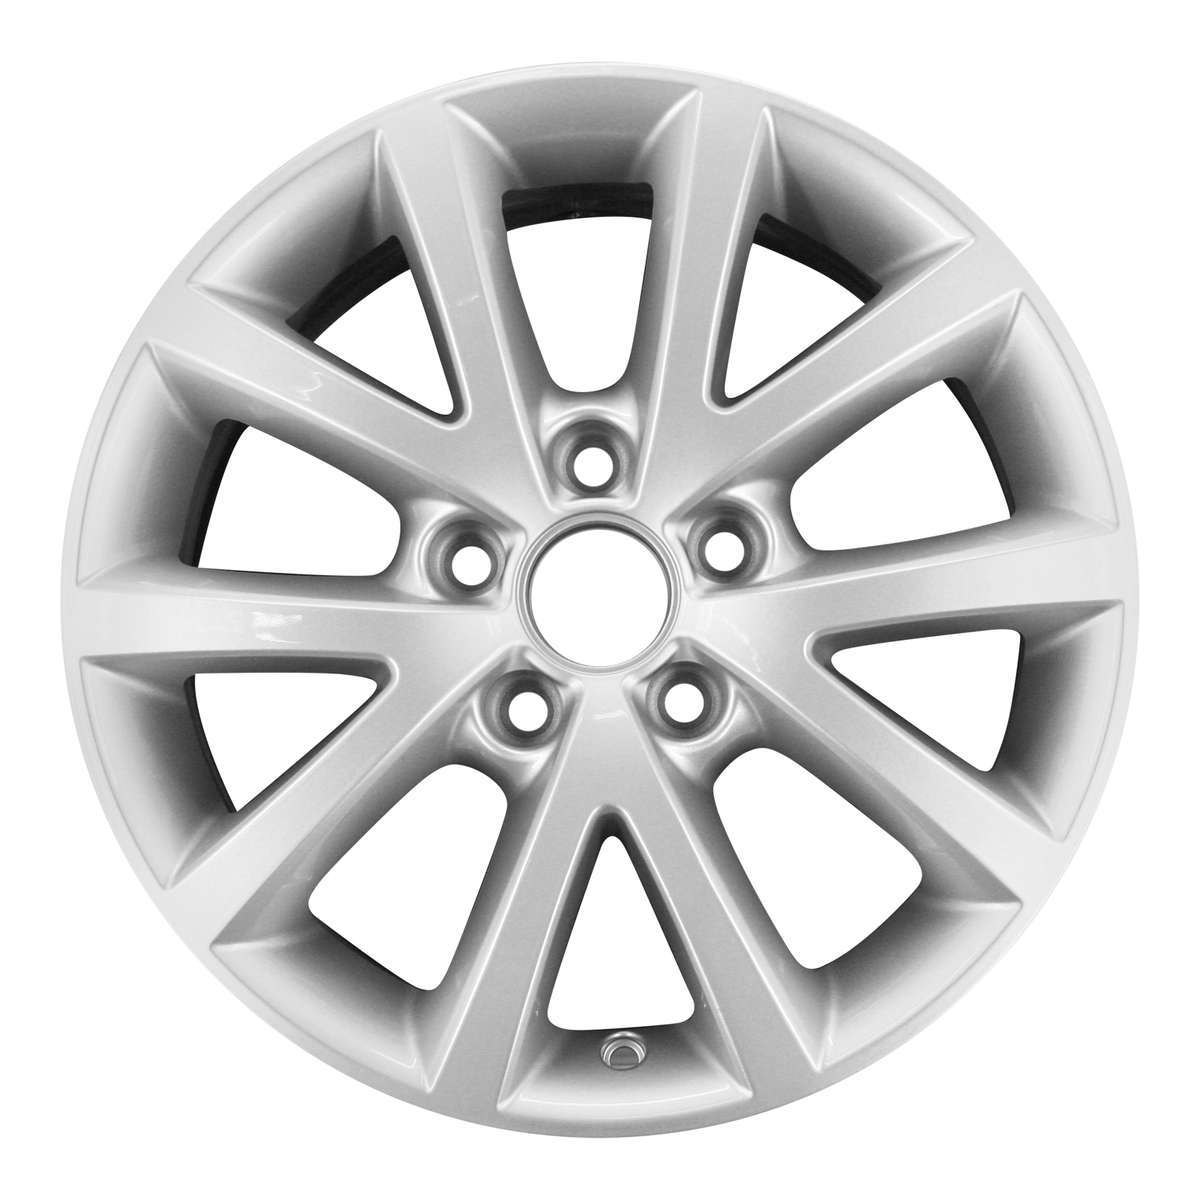 2014 Volkswagen Jetta New 16" Replacement Wheel Rim RW69897S